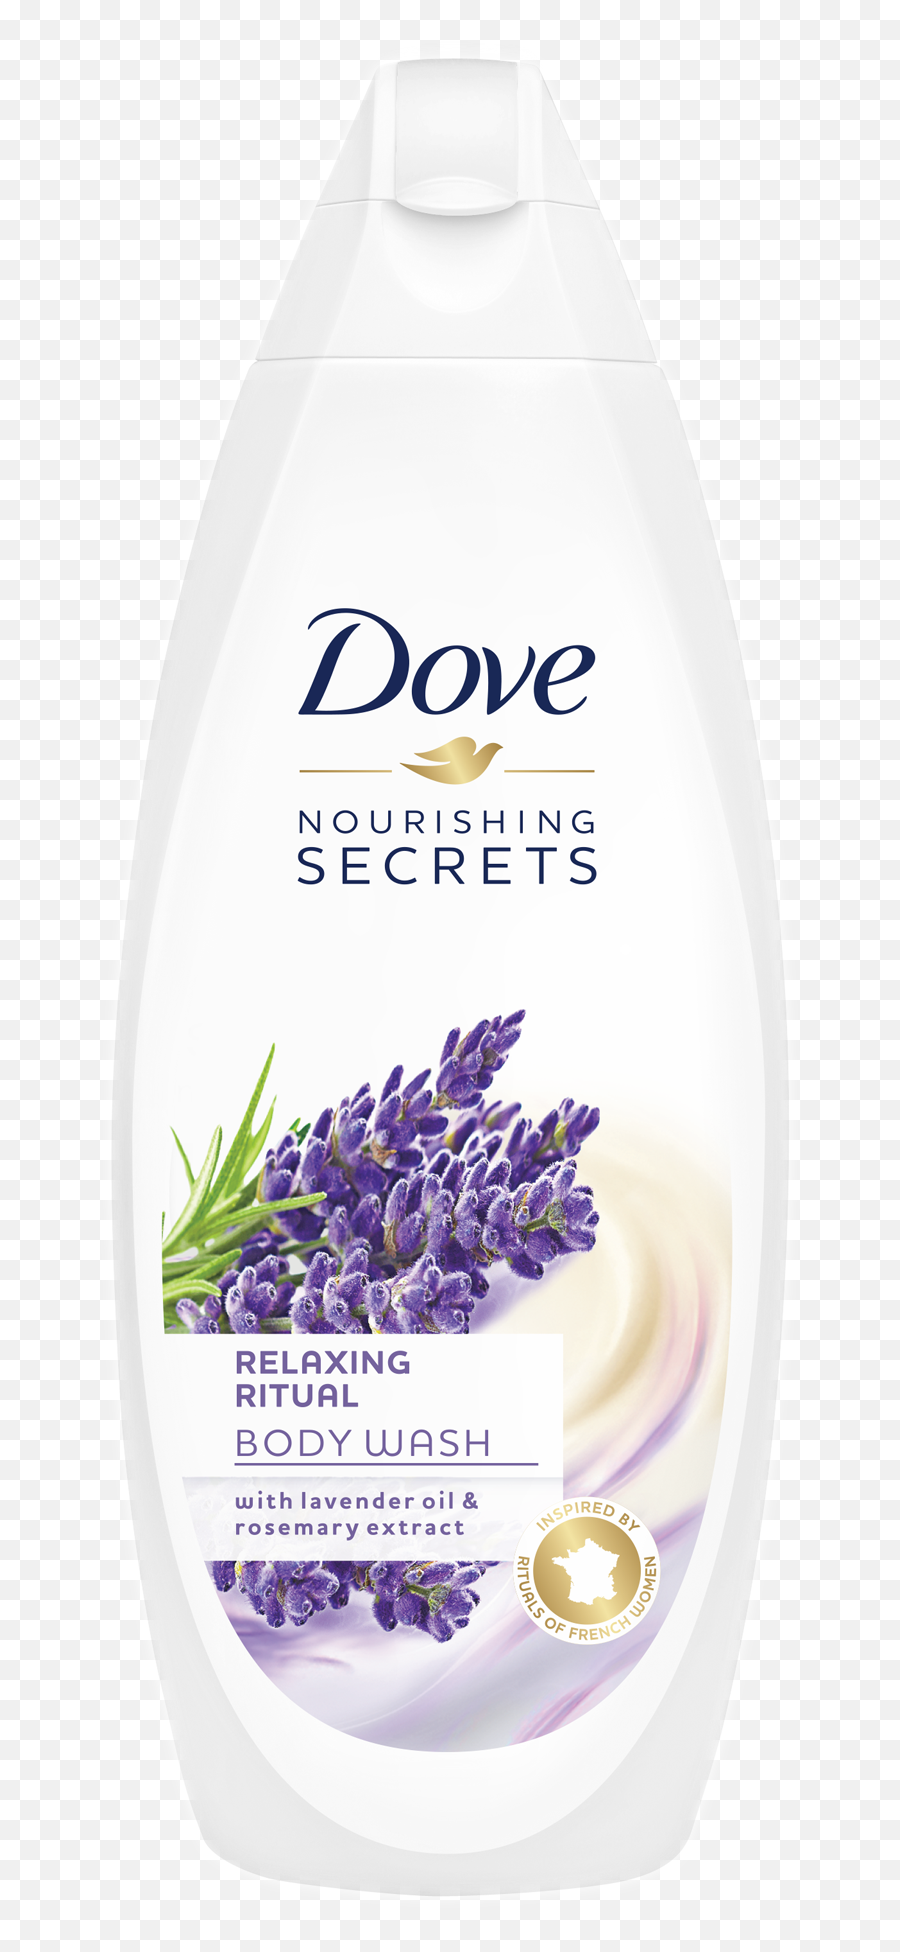 Air Freshener Sprays  Febreze Mediterranean Lavender